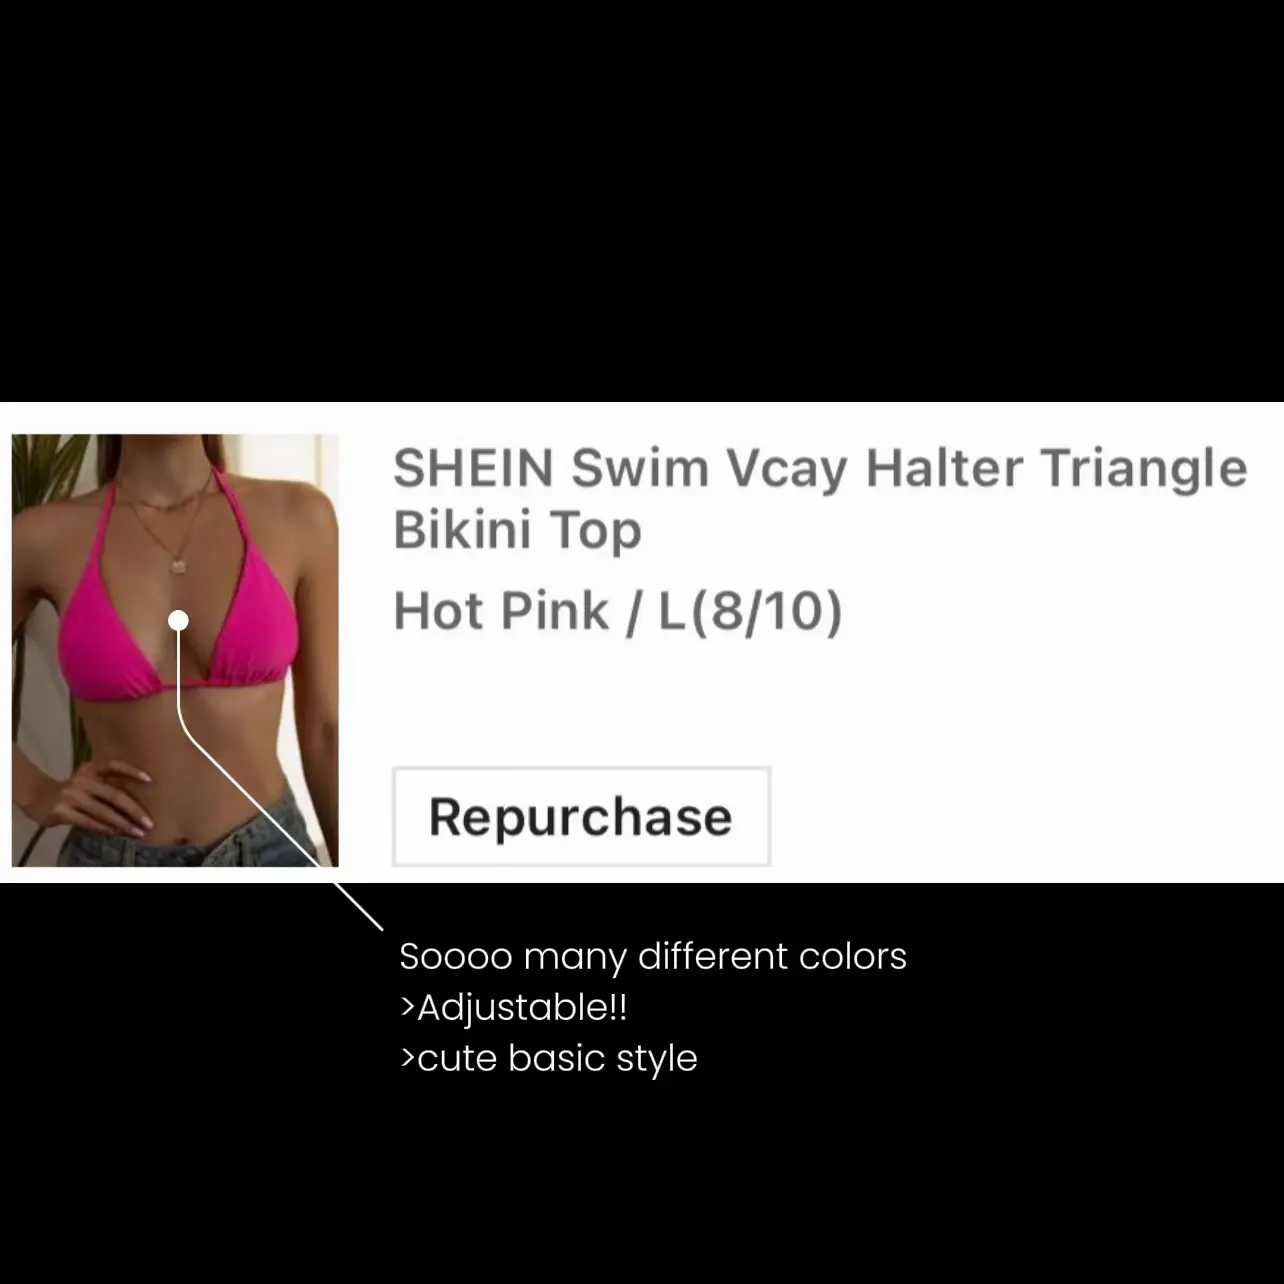 Women's Smocked Bralette Bikini Top - Wild Fable™ Pink XXS